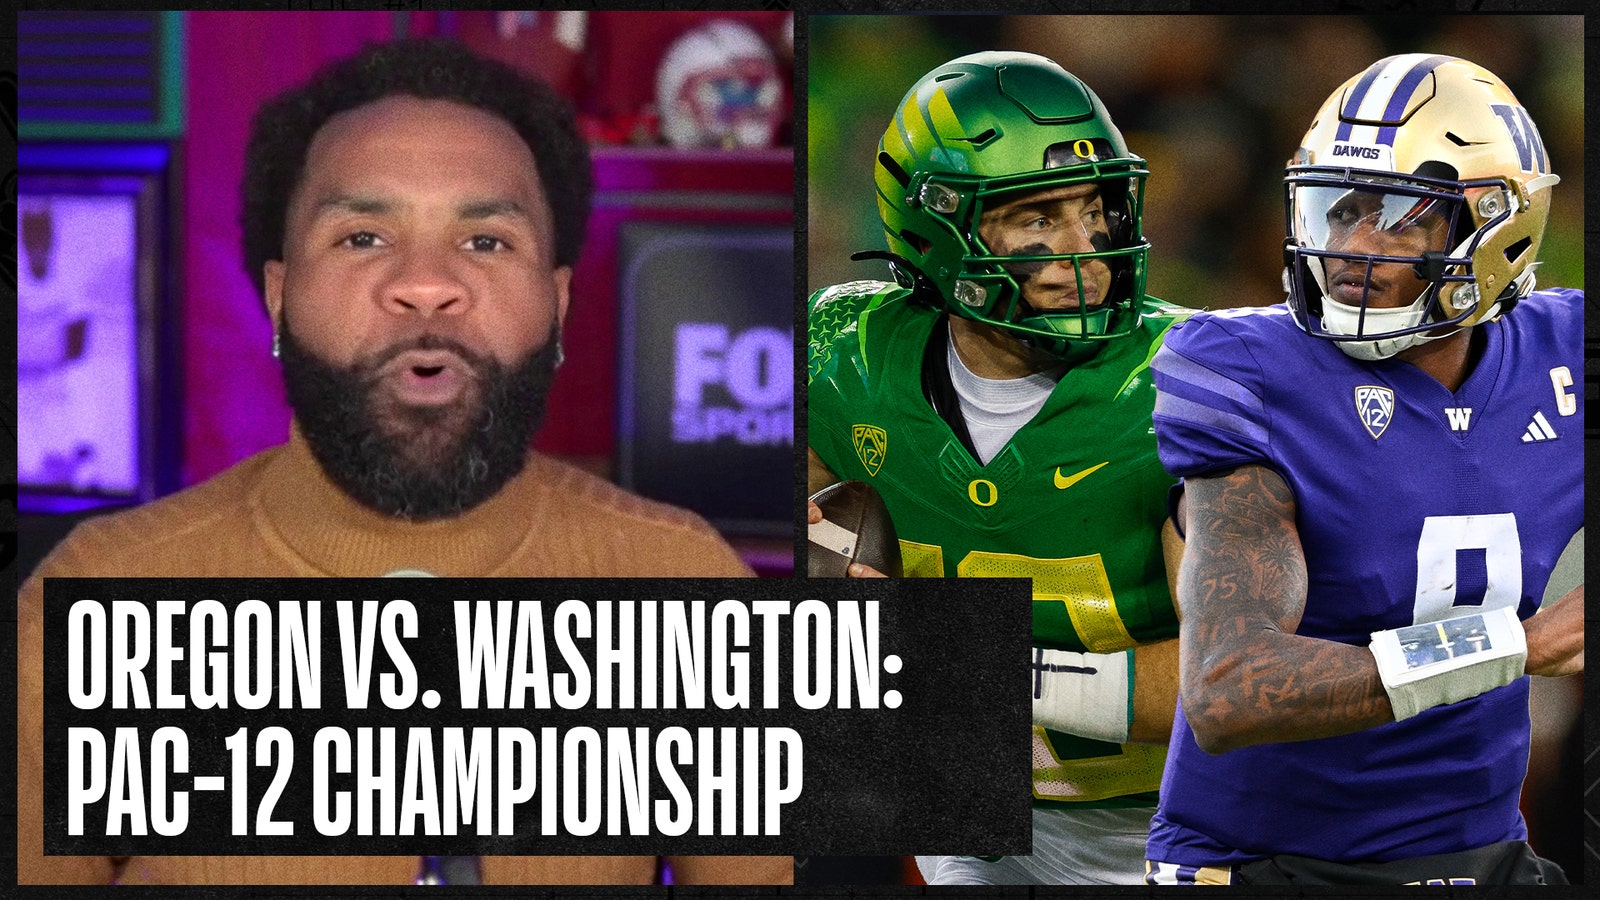 Can Washington beat Oregon again?